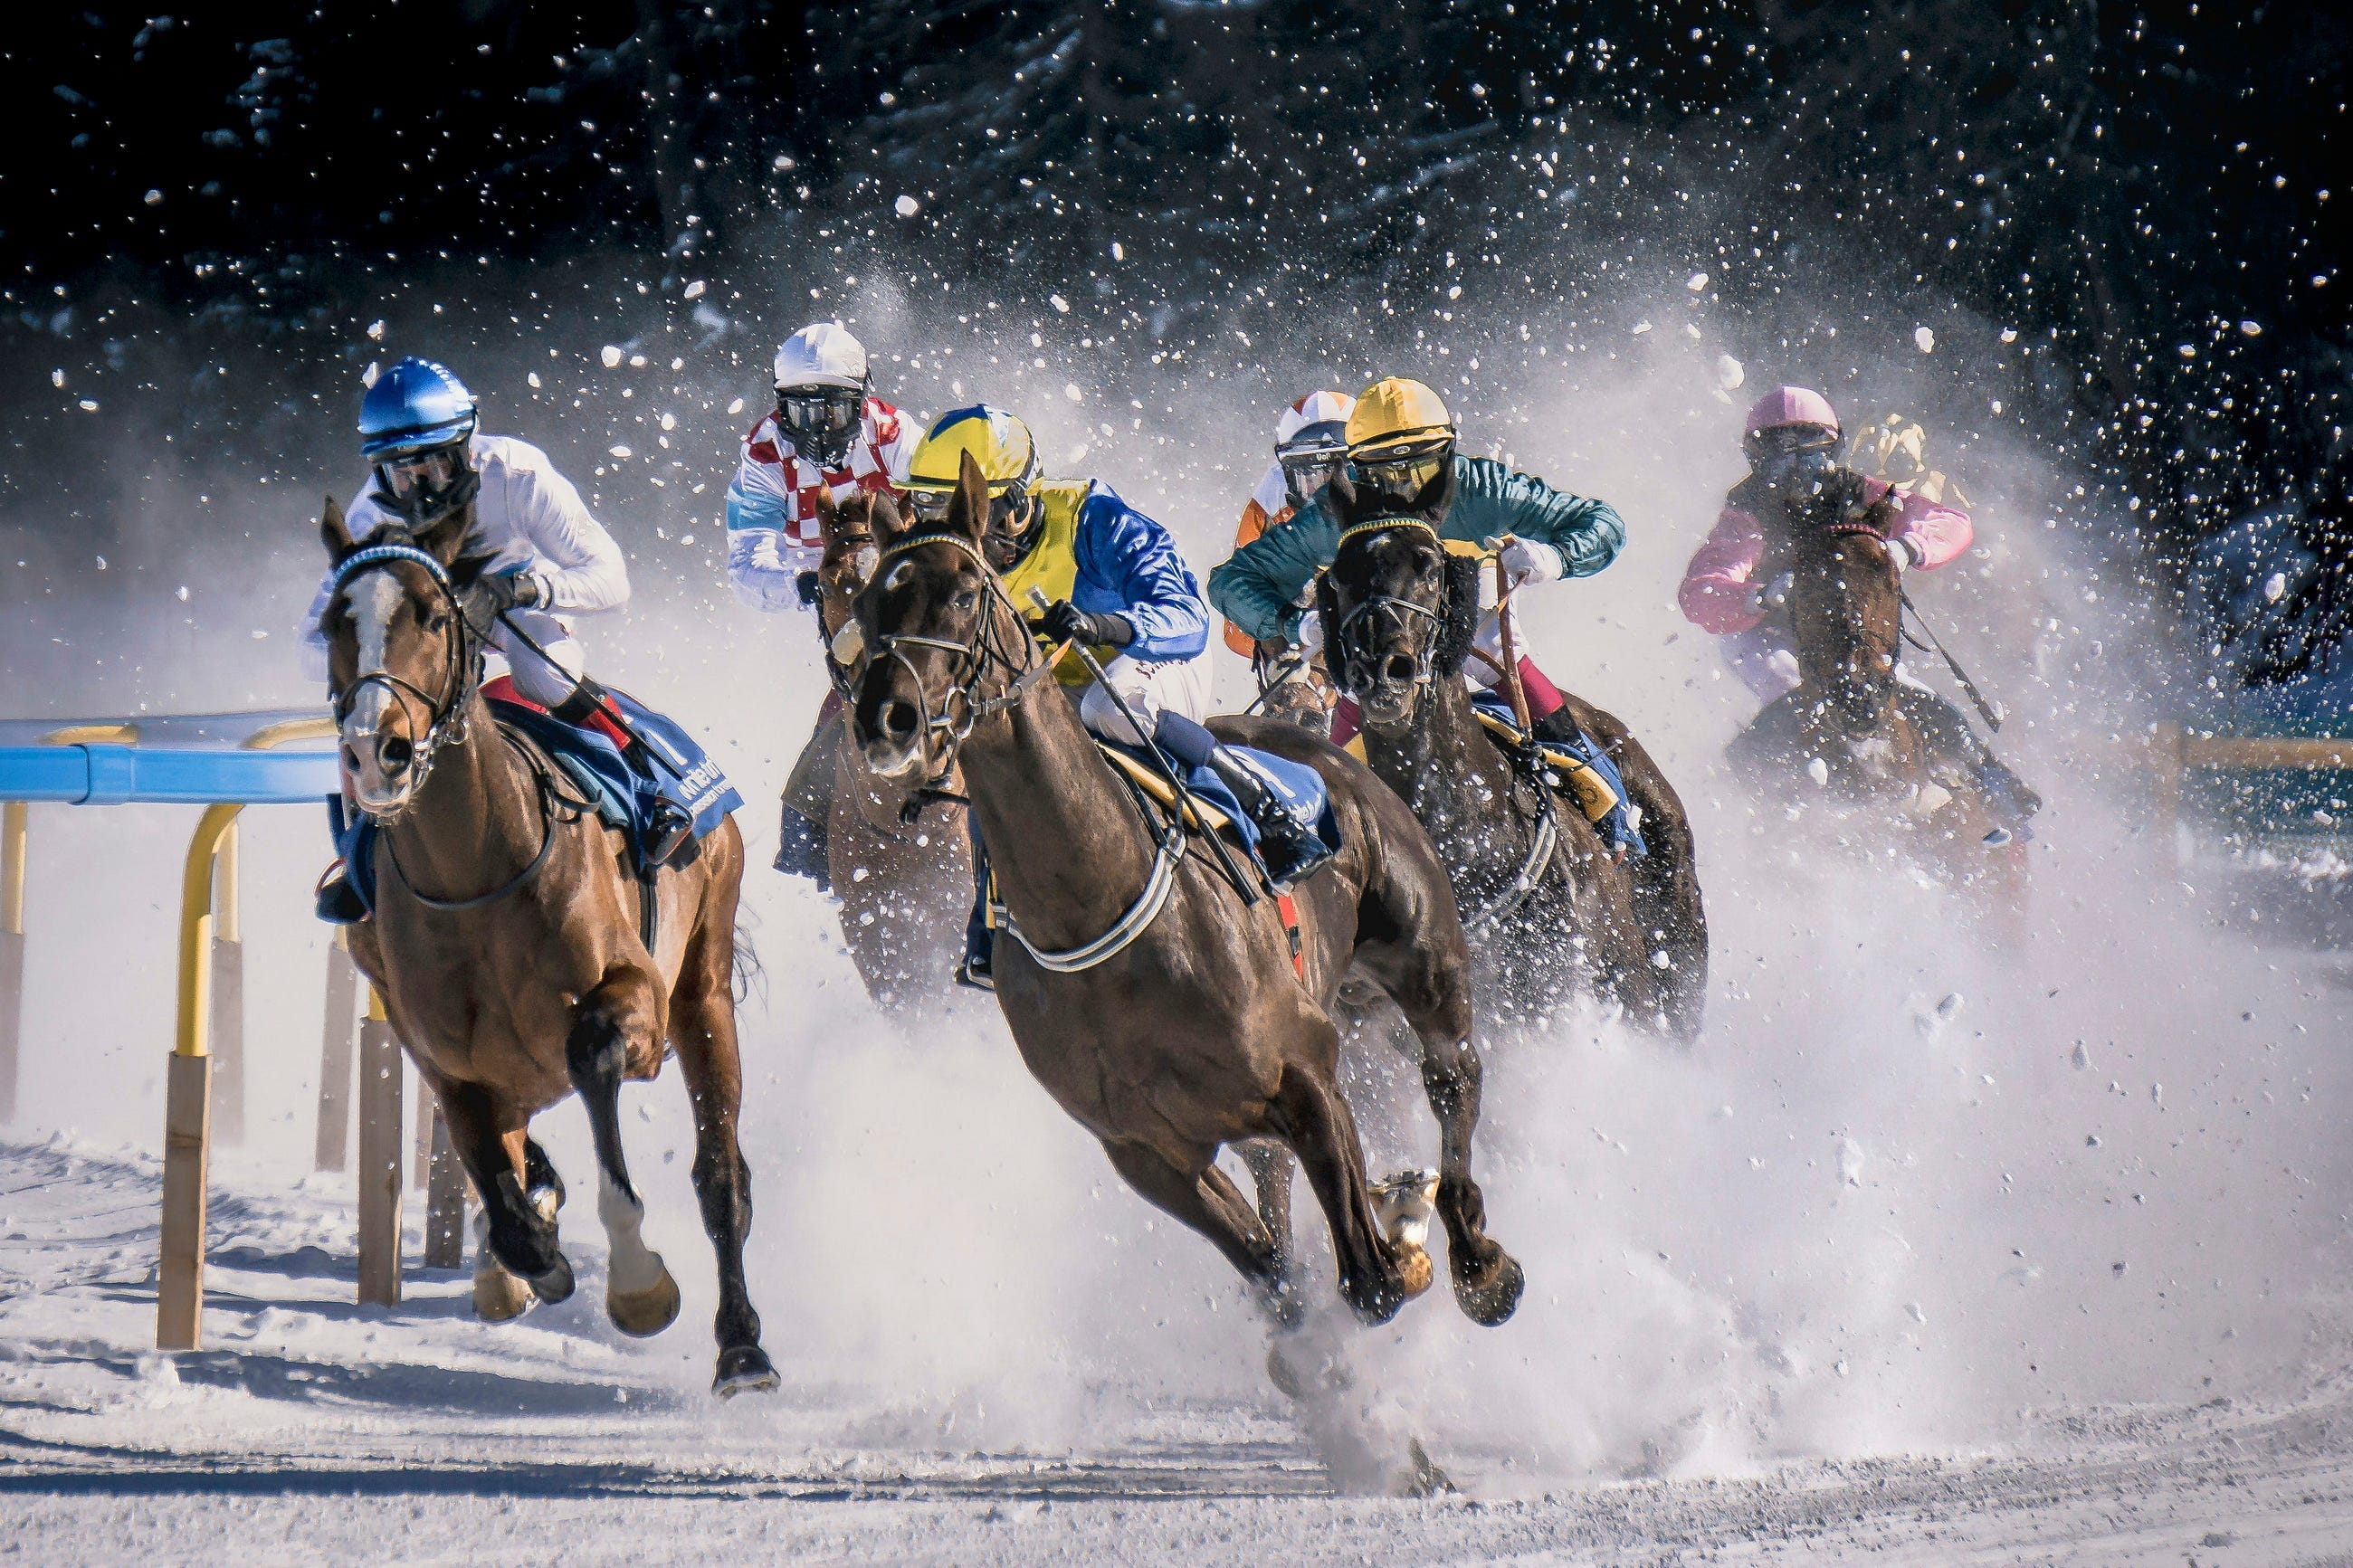 A horse race on a snowy track — Photo by Pietro Mattia on Unsplash